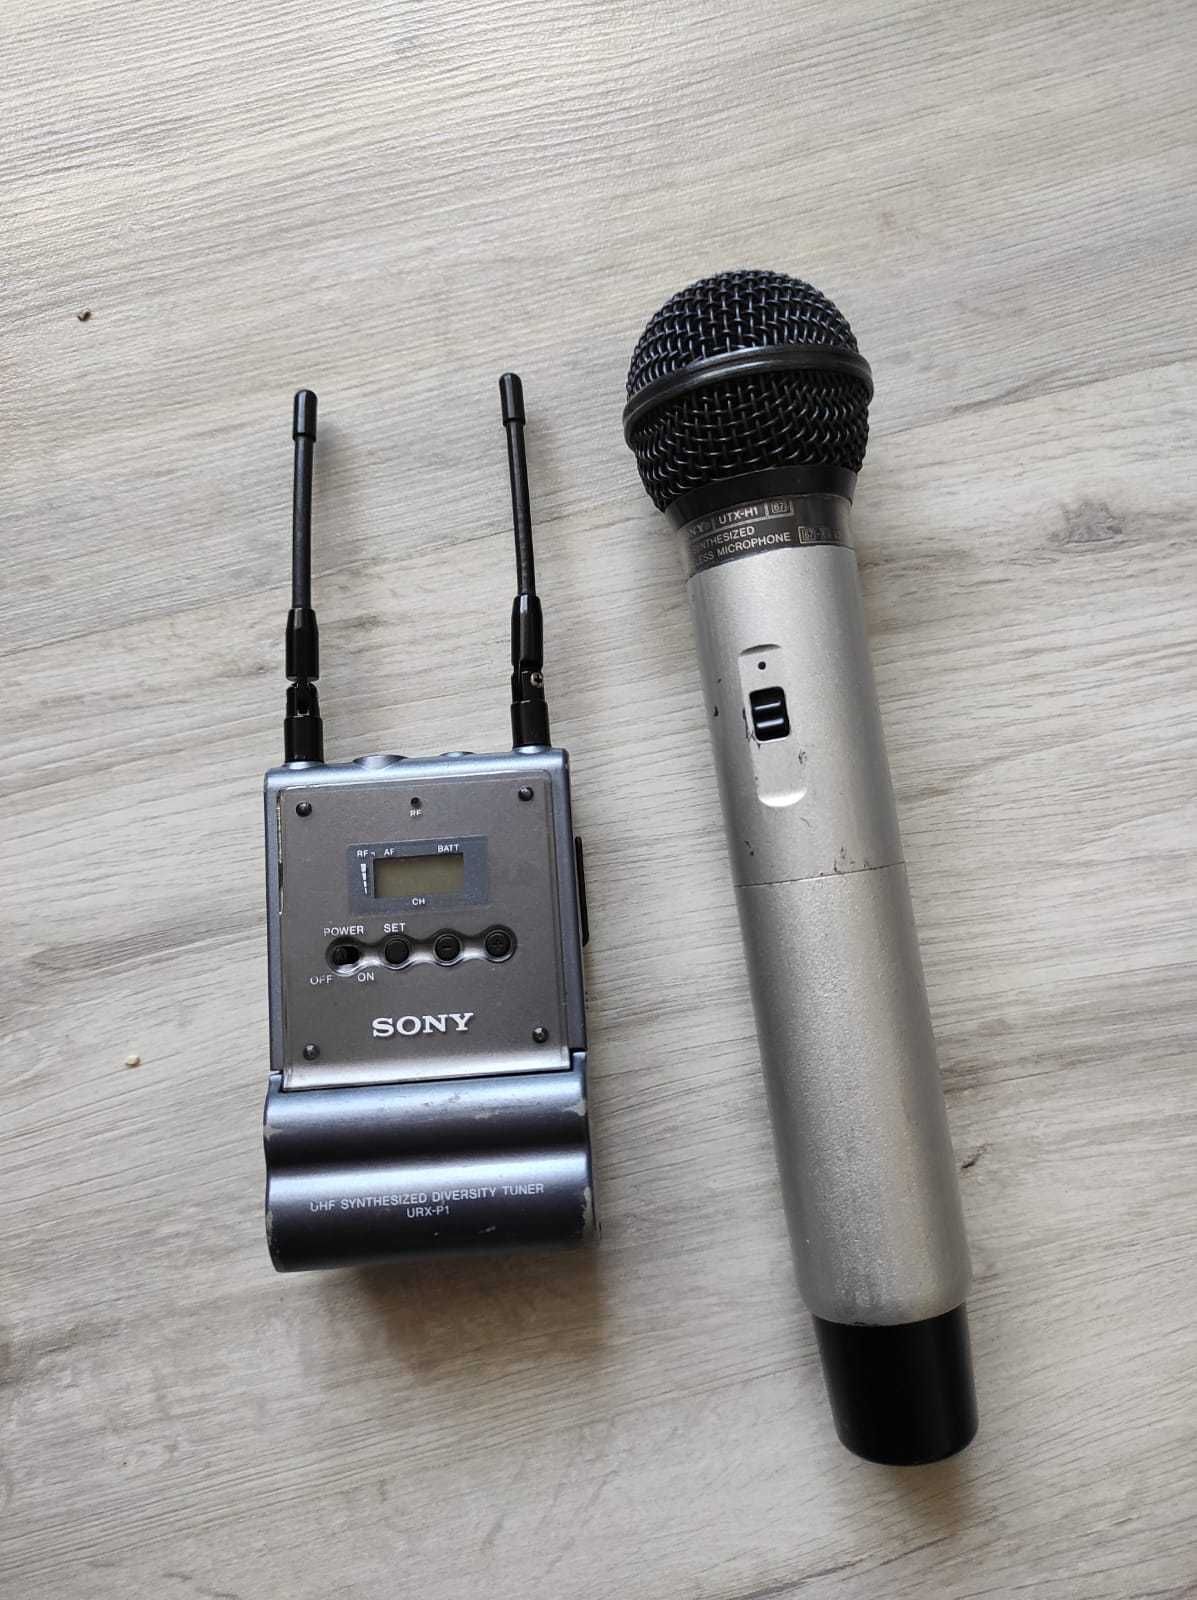 Extraordinary organ classmate Kit microfon wireless Sony Piatra Neamt • OLX.ro